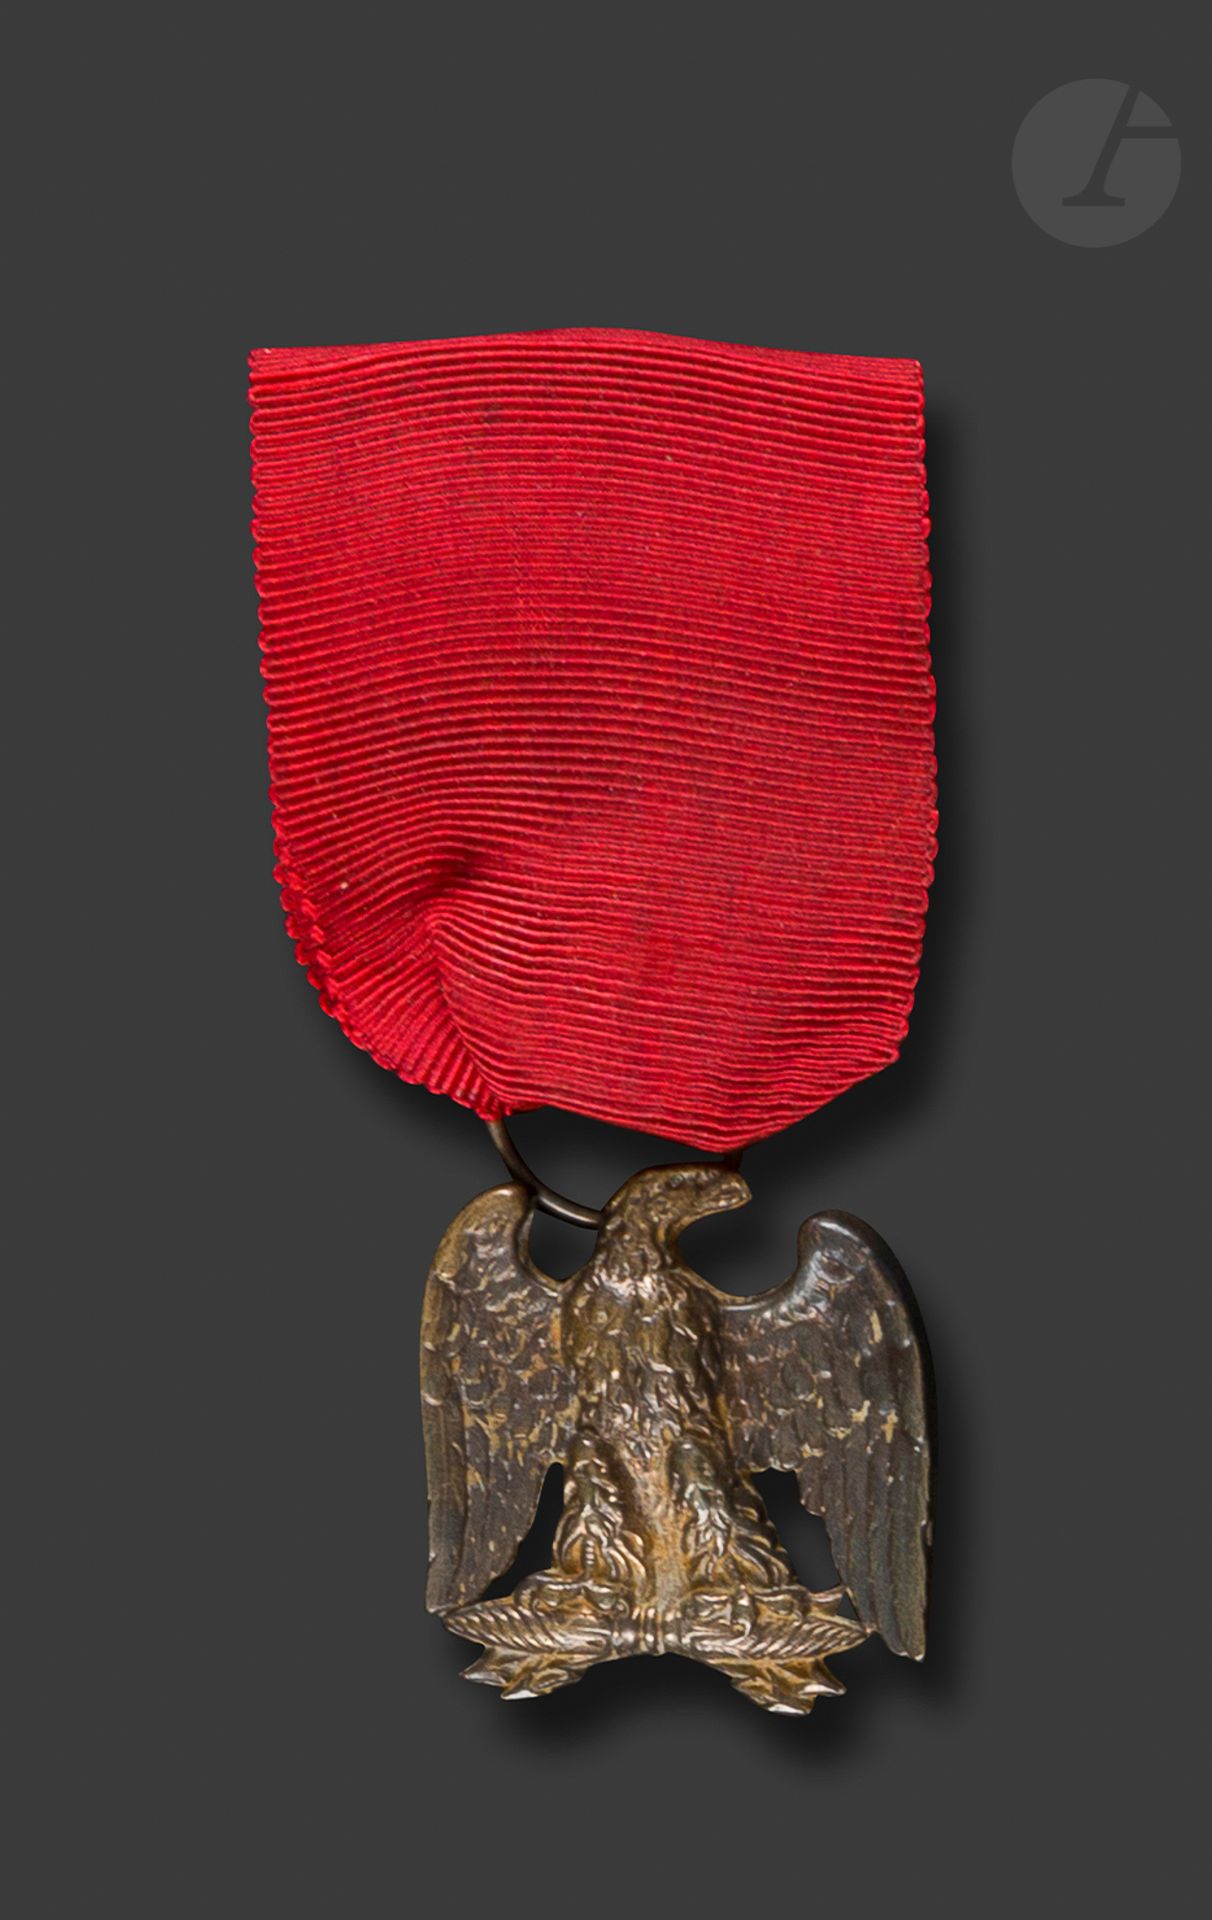 Null 第一帝国
退伍军人帝国之鹰
徽章。
 
在青铜器上。反面为素面，上有扣子。
猩红丝带。
31 x 30 mmT
.T.B




。